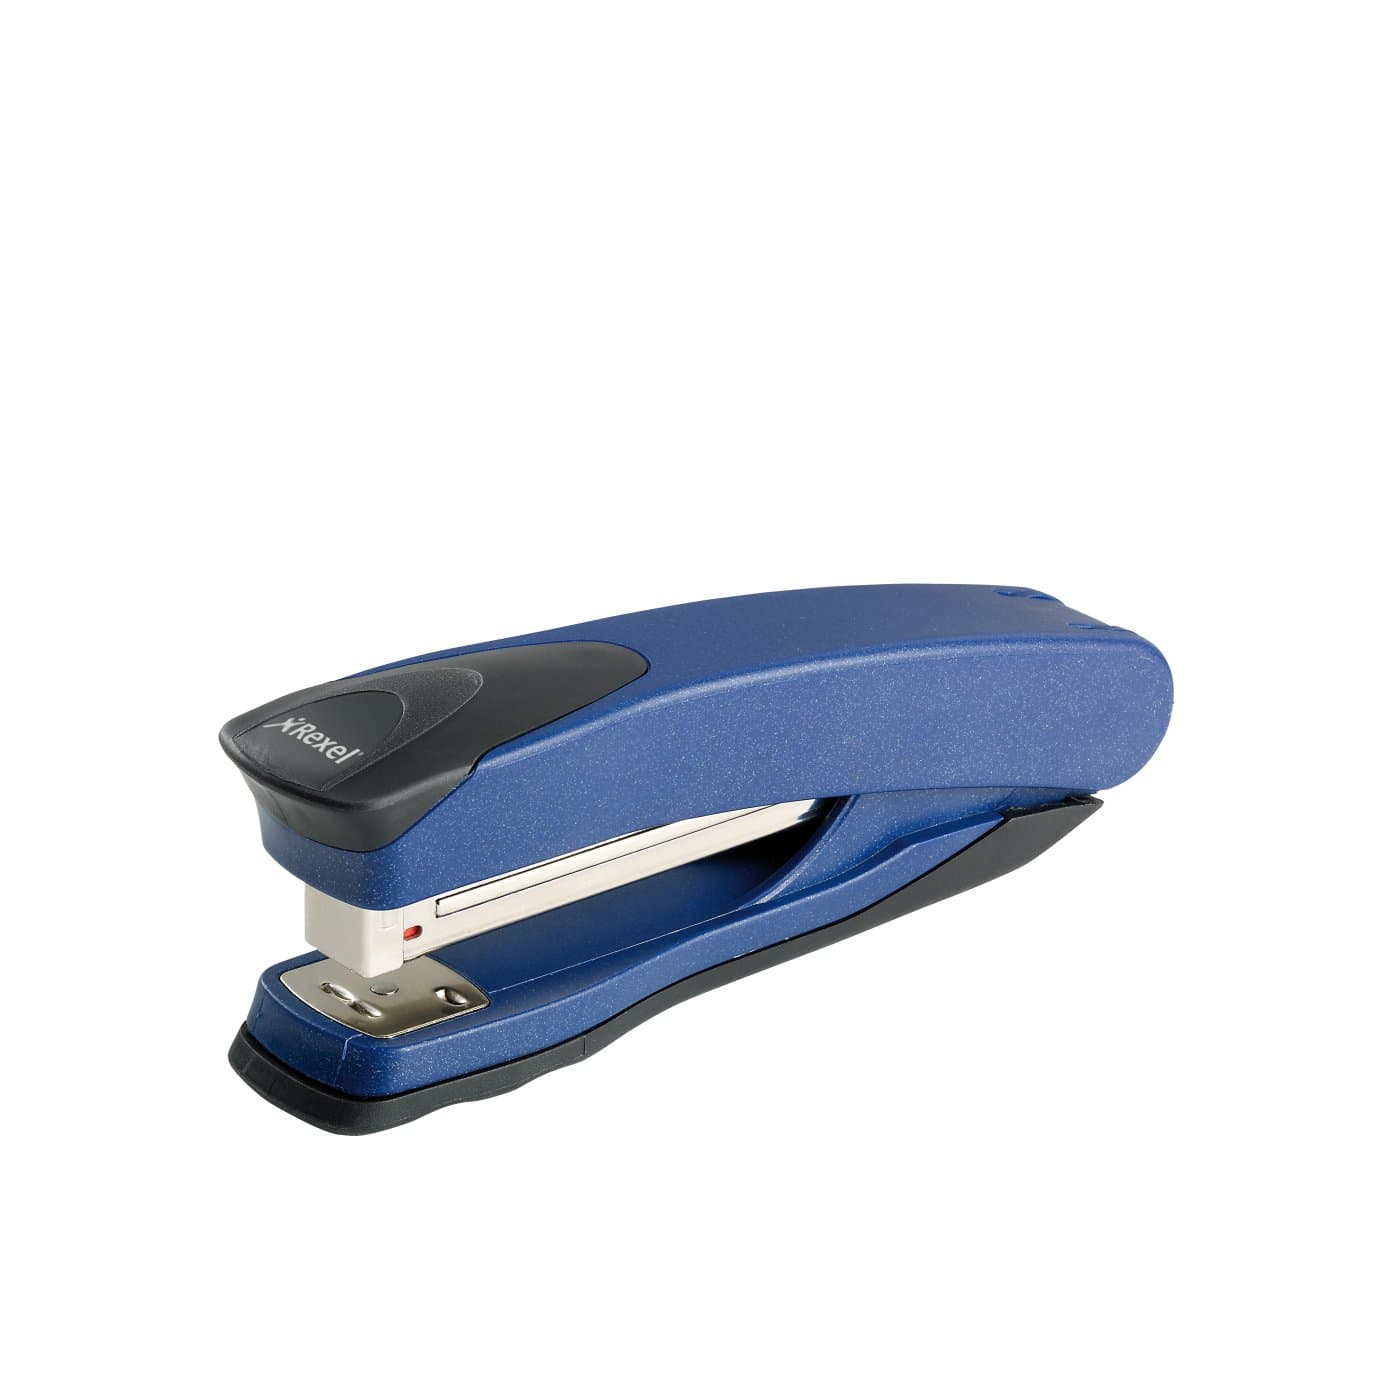 2100005 acco Rexel Taurus Full Strip Stapler Blue 2100005 - AD01